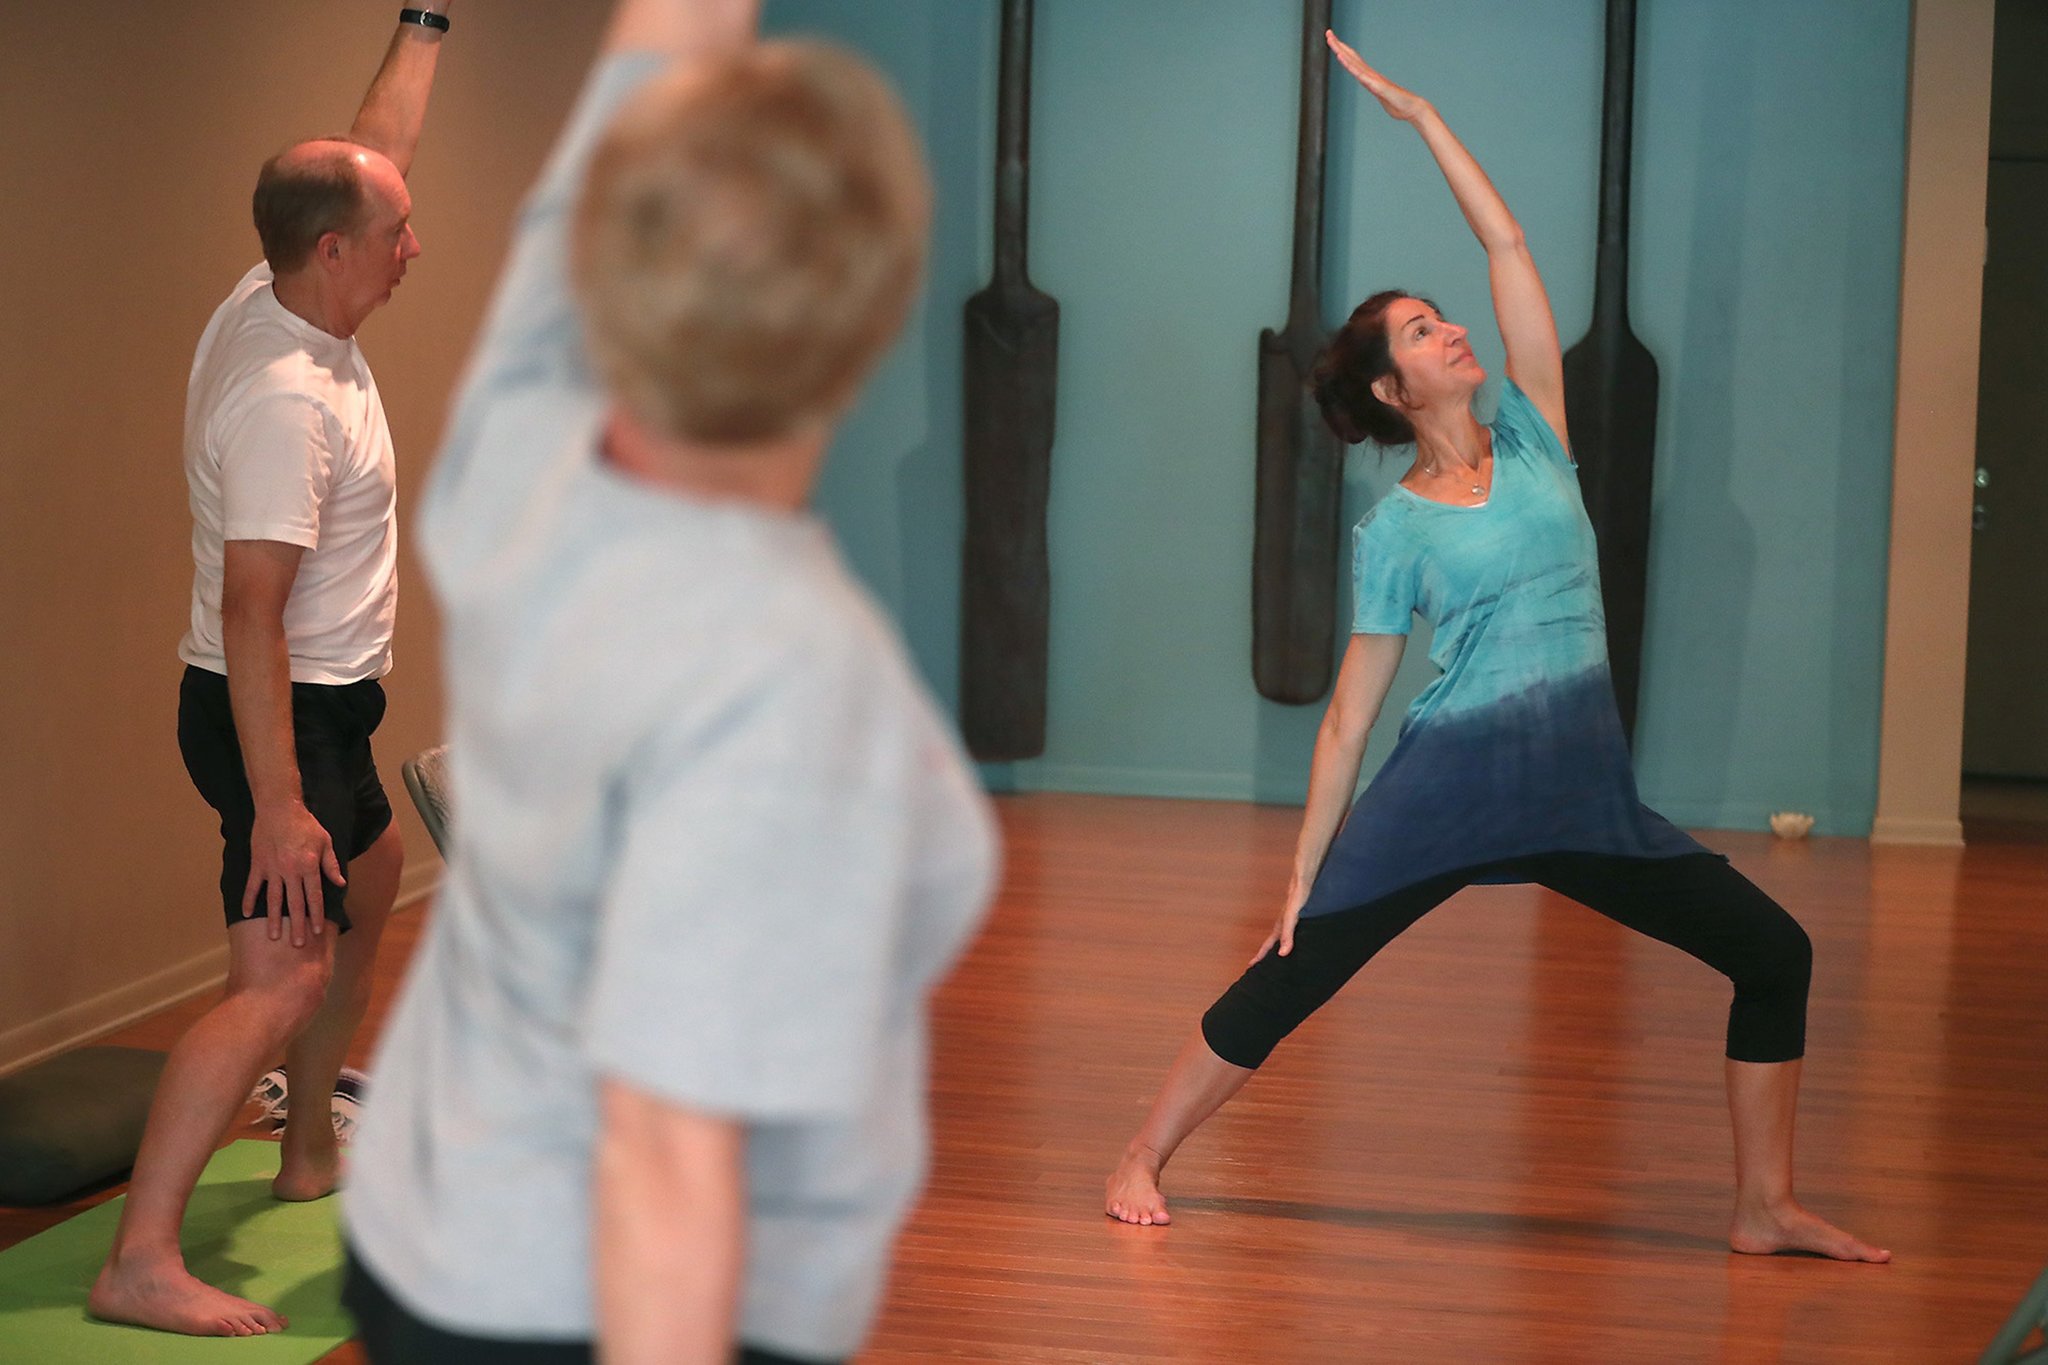 Can yoga help Parkinsonâs patients?